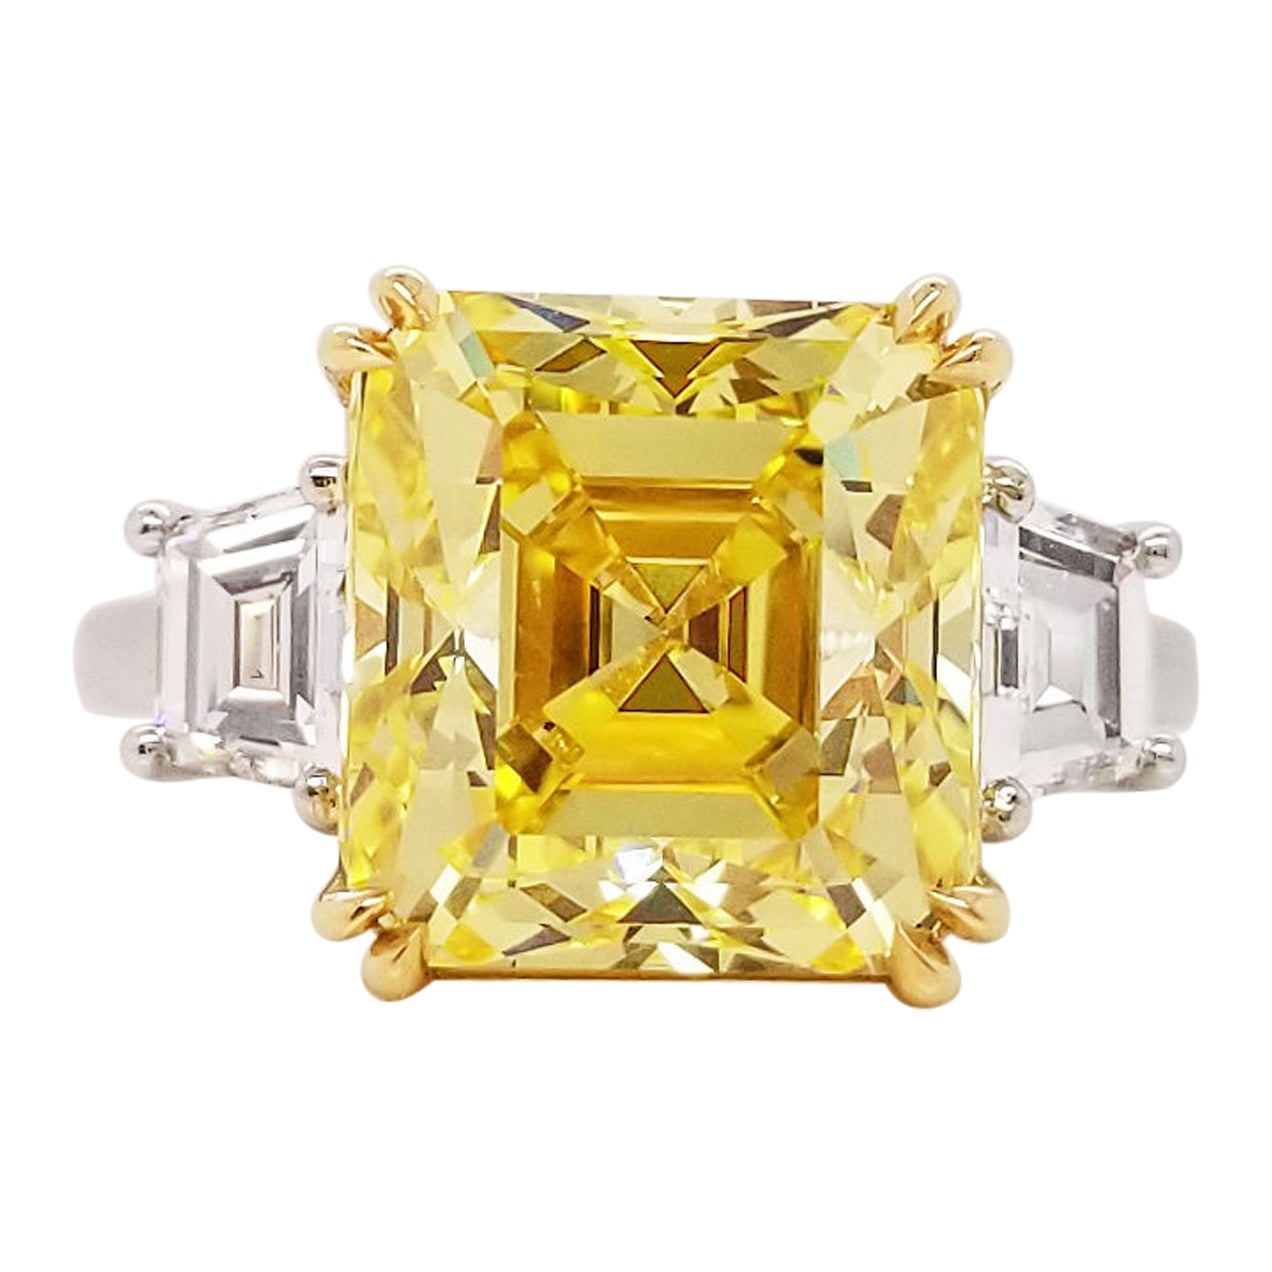 Scarselli 6 Carat Fancy Vivid Yellow Emerald Cut Diamond Ring in Platinum